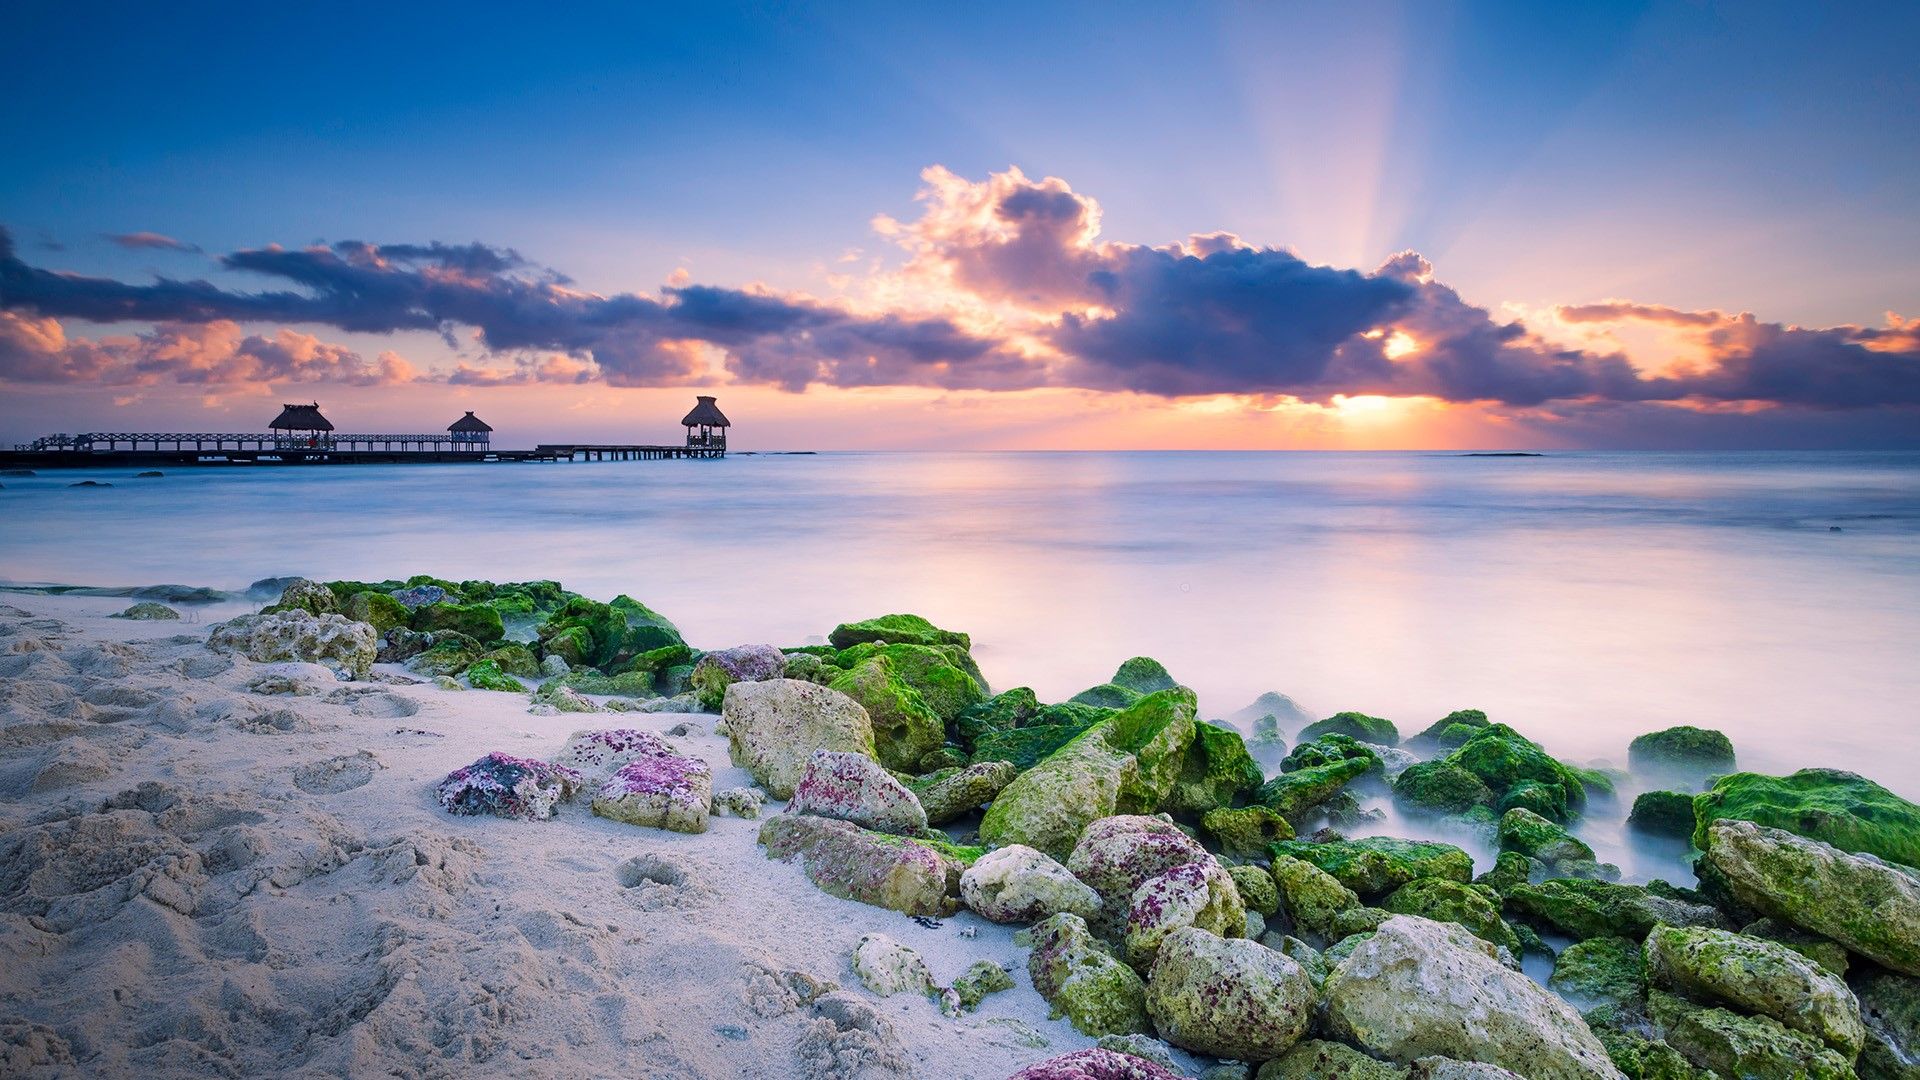 Sunrise magic over the Caribbean, Mayan Riviera, Cancun, Quintana Roo, Mexico. Windows 10 Spotlight Image